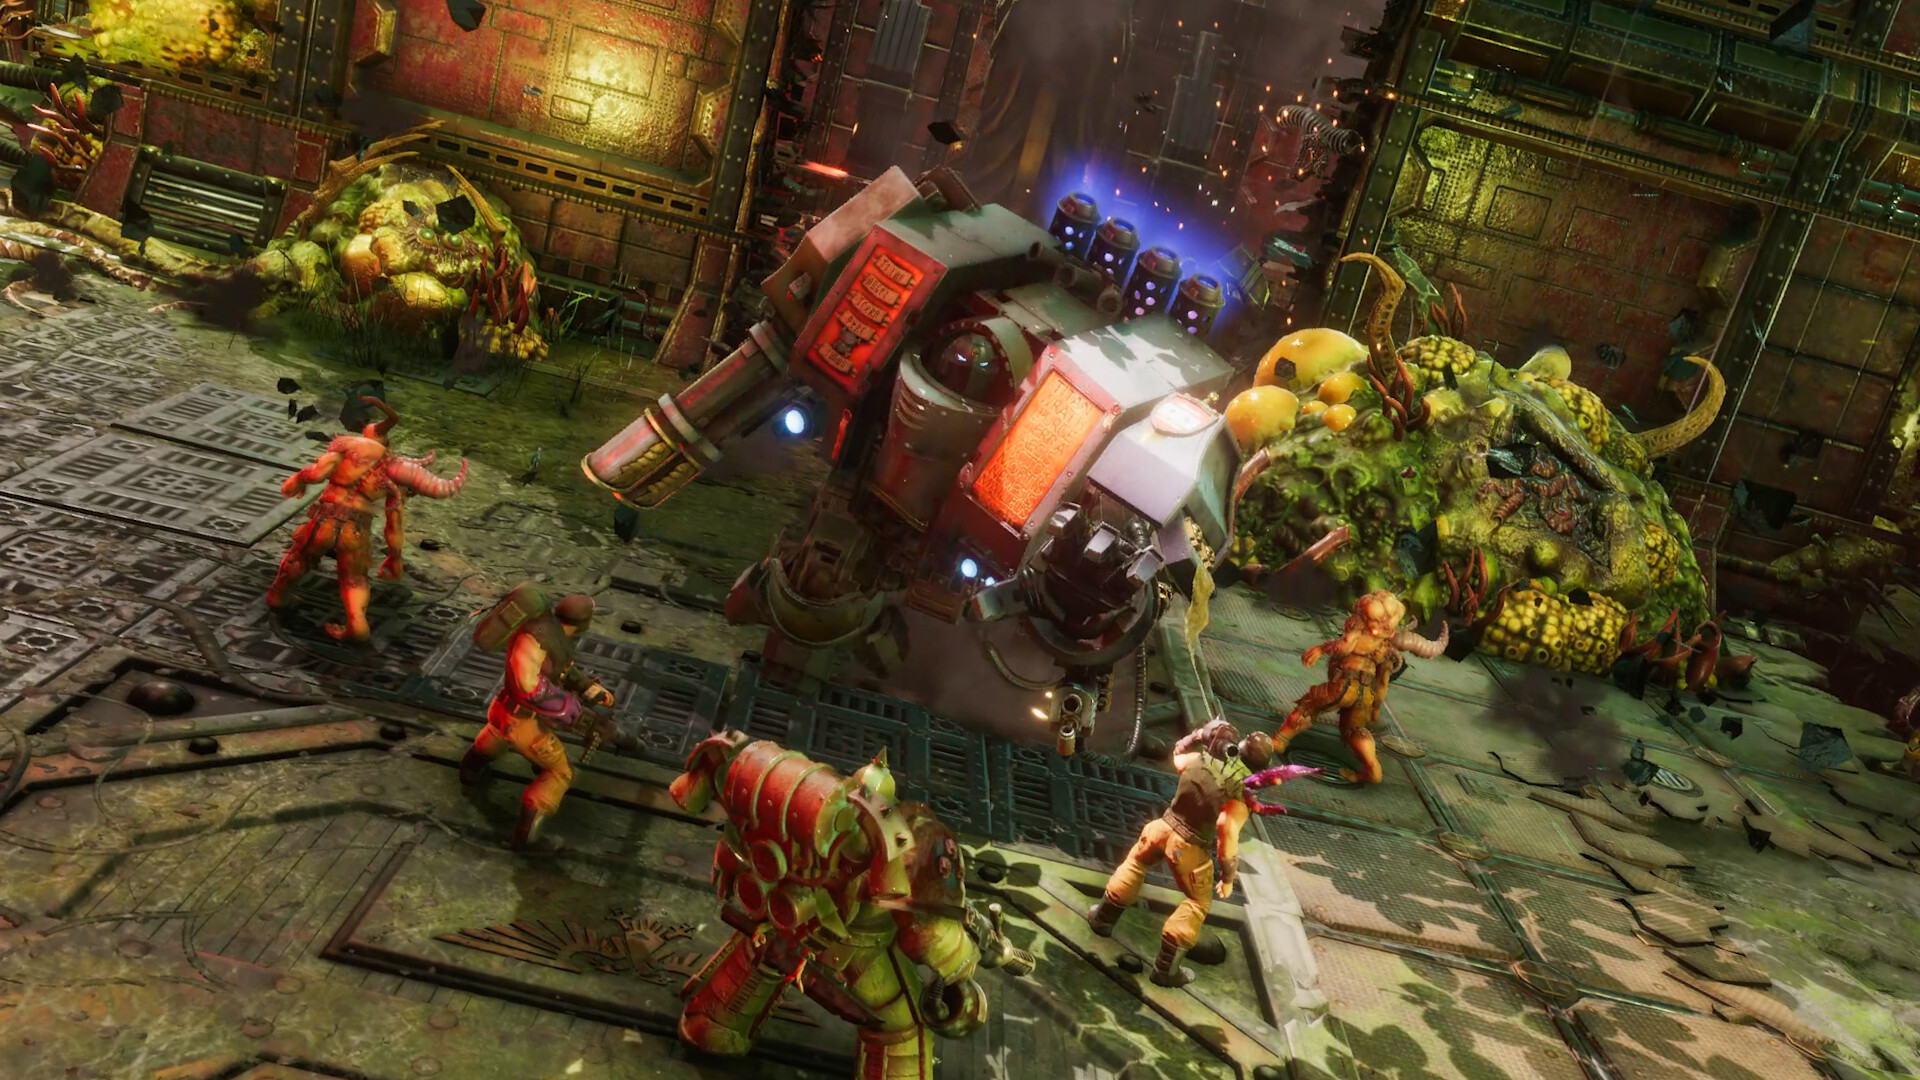 Warhammer 40,000: Chaos Gate - Daemonhunters - Duty Eternal DLC Steam CD Key